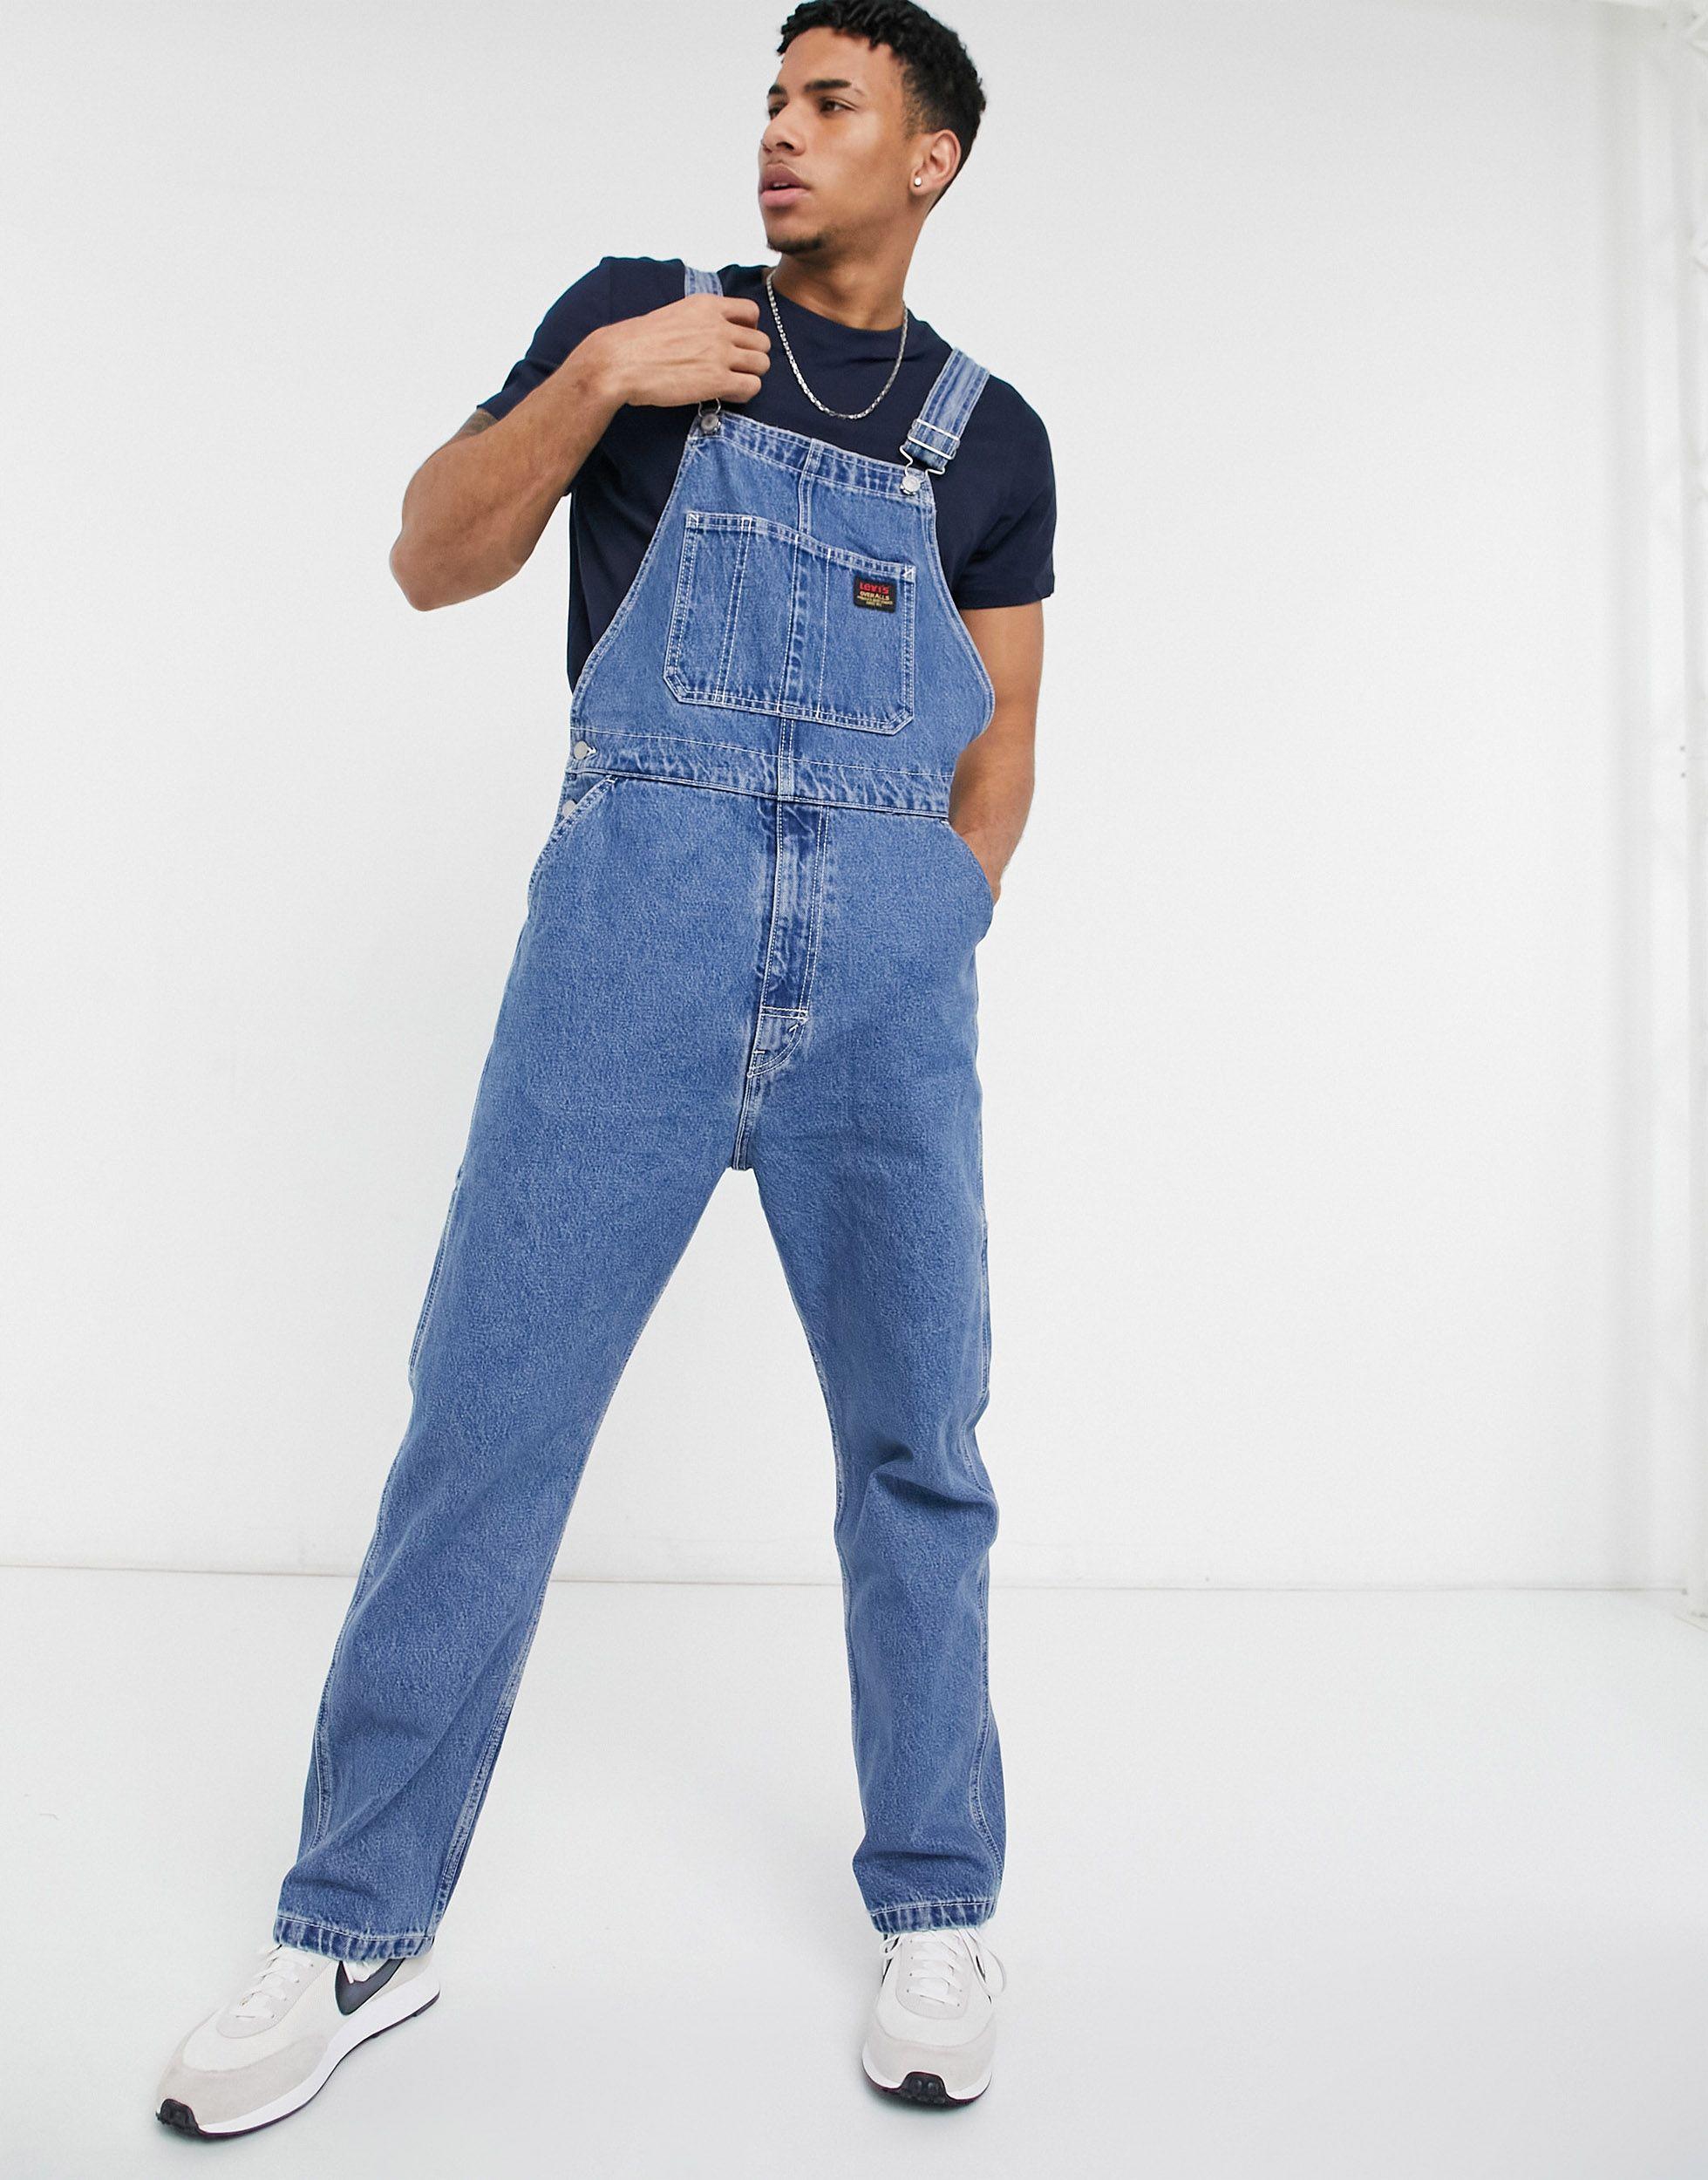 McCarthy Jeans Mens Denim Lightwash Blue Dungarees King Size Overalls 